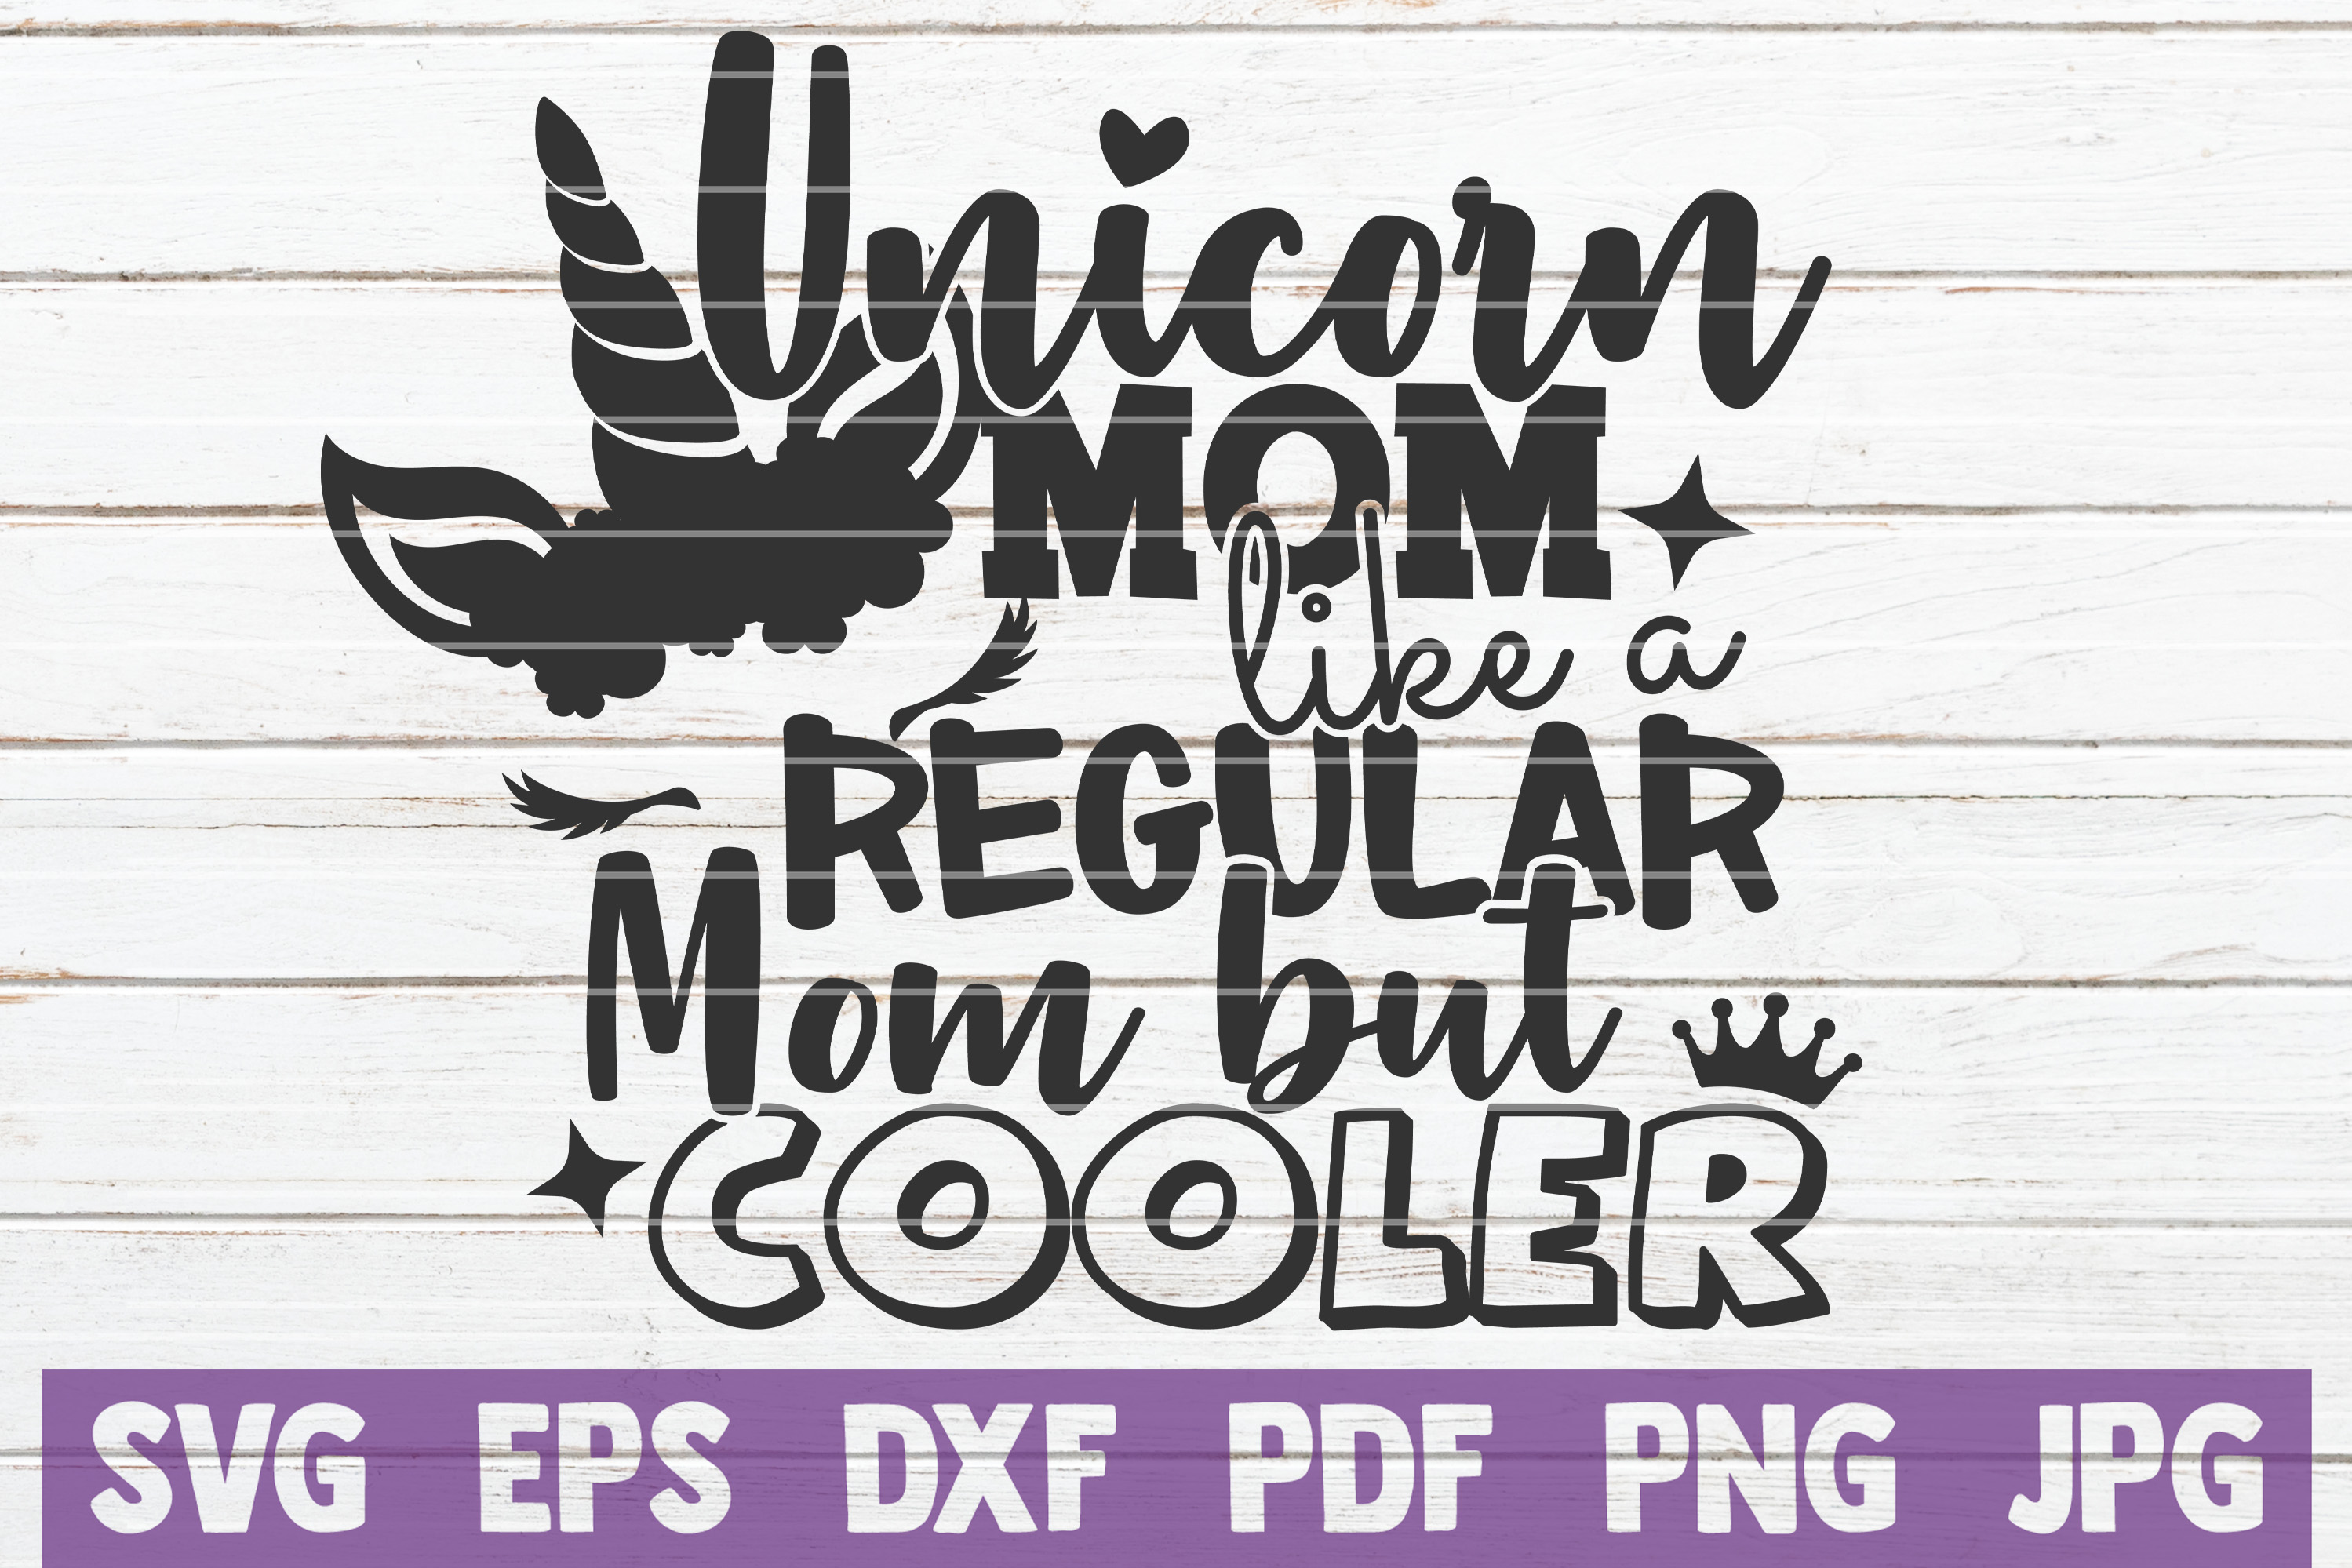 Download Unicorn Mom Like a Regular Mom But Cooler SVG Cut File